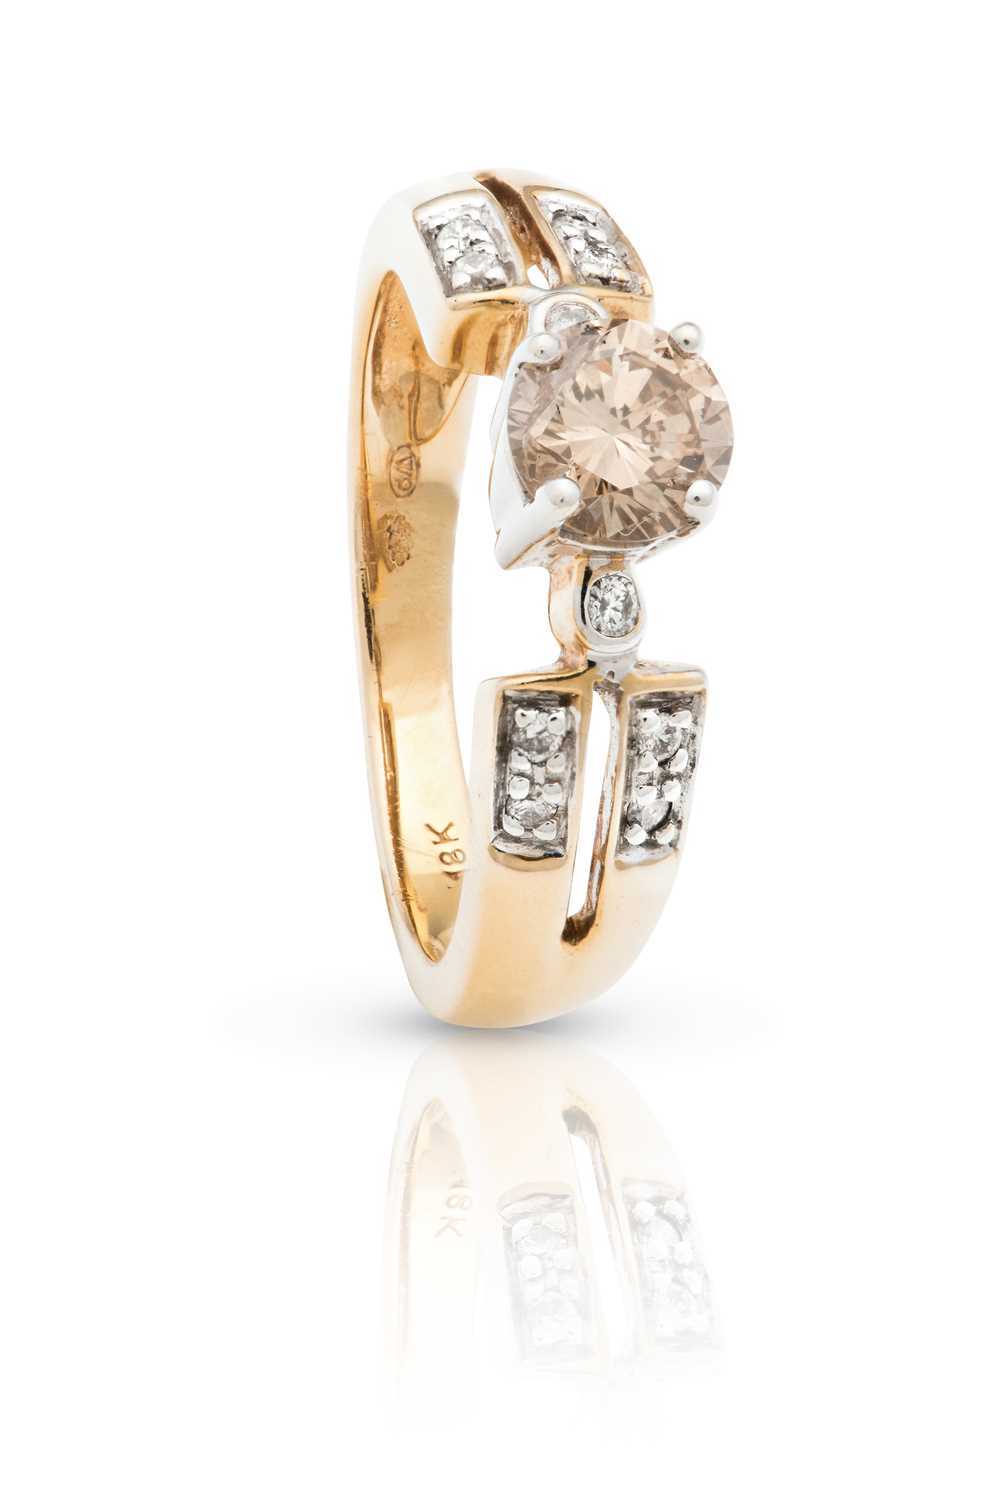 Lot 532 - 18K Gold Diamond Ring